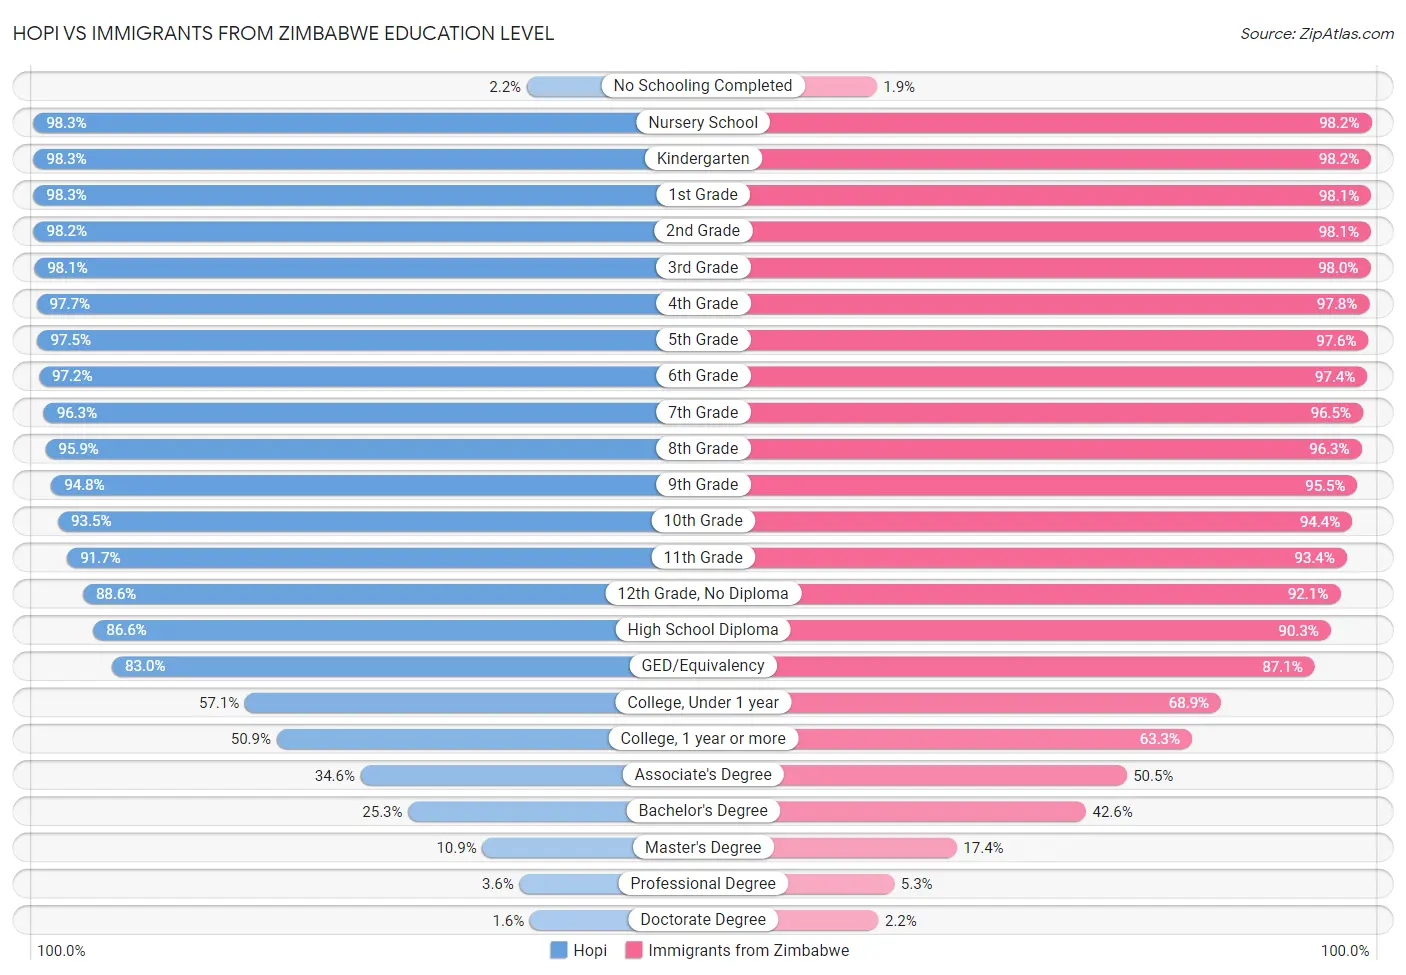 Hopi vs Immigrants from Zimbabwe Education Level